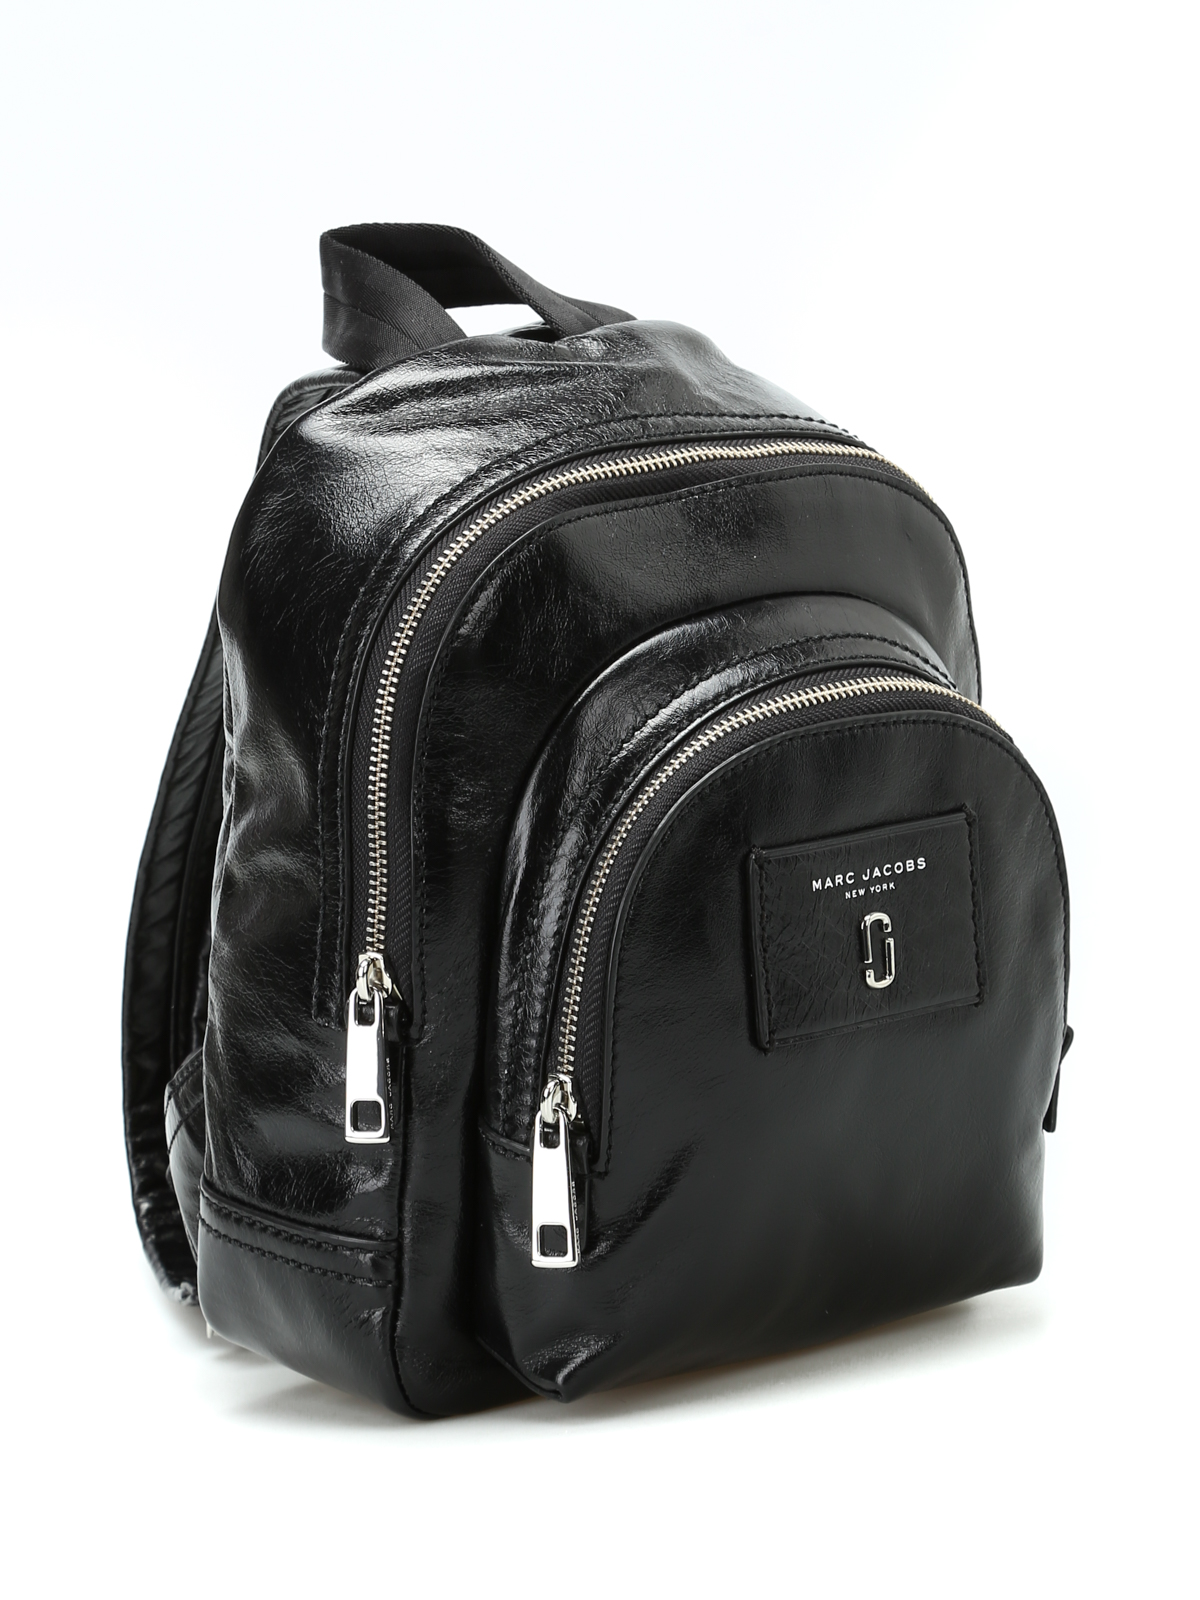 Backpacks Marc Jacobs - Black leather mini backpack - M0013264001